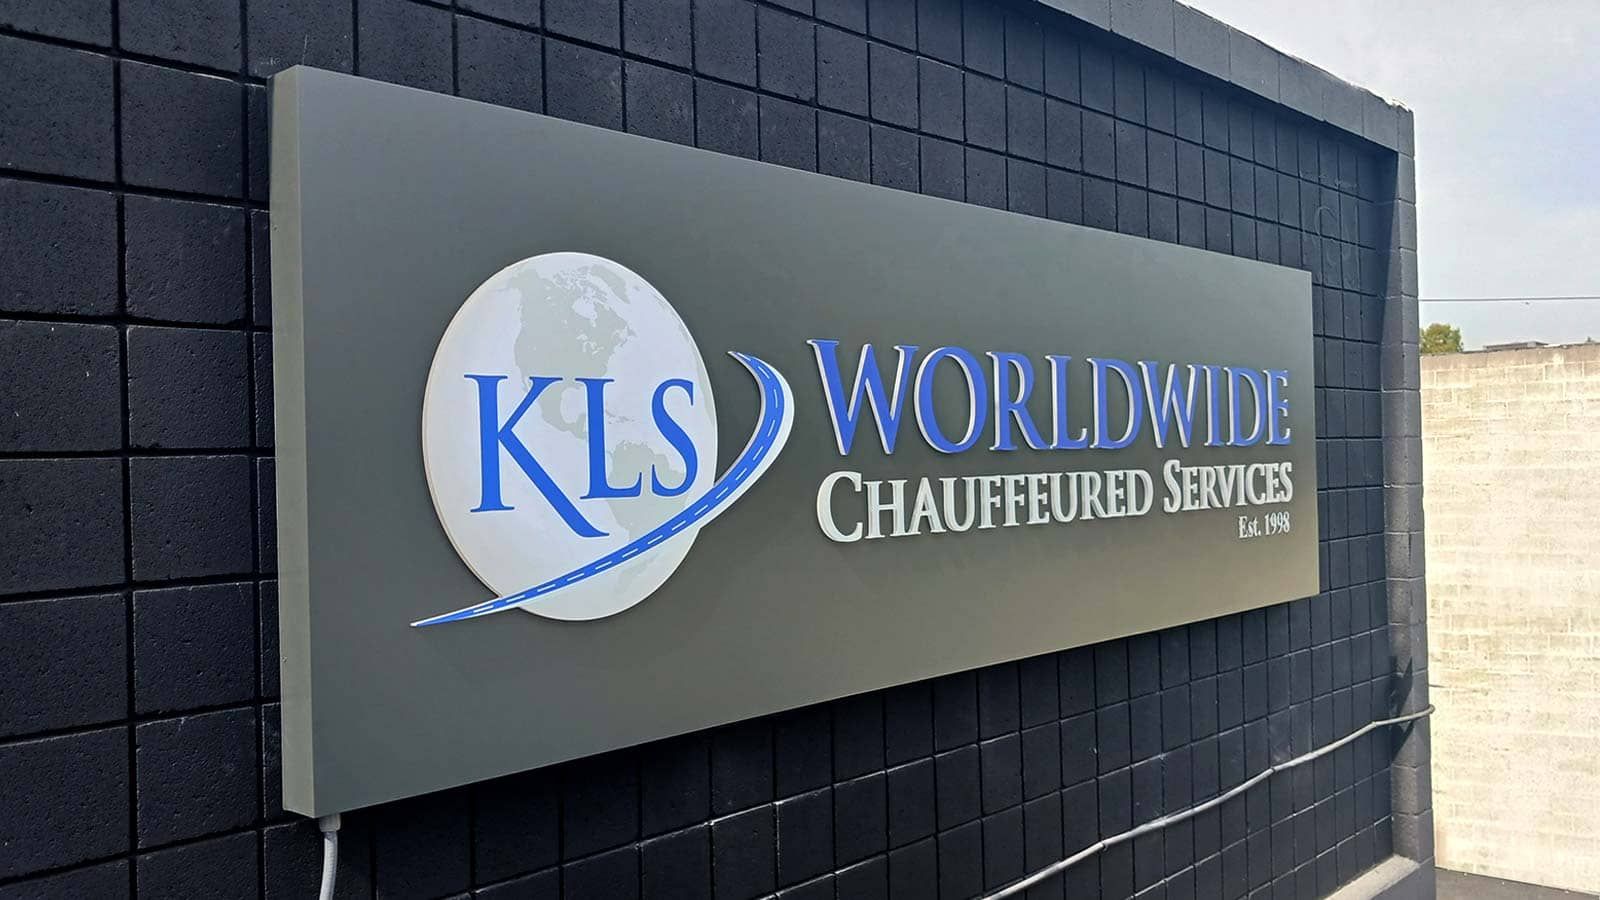 KLS Worldwide push through sign installed outdoors